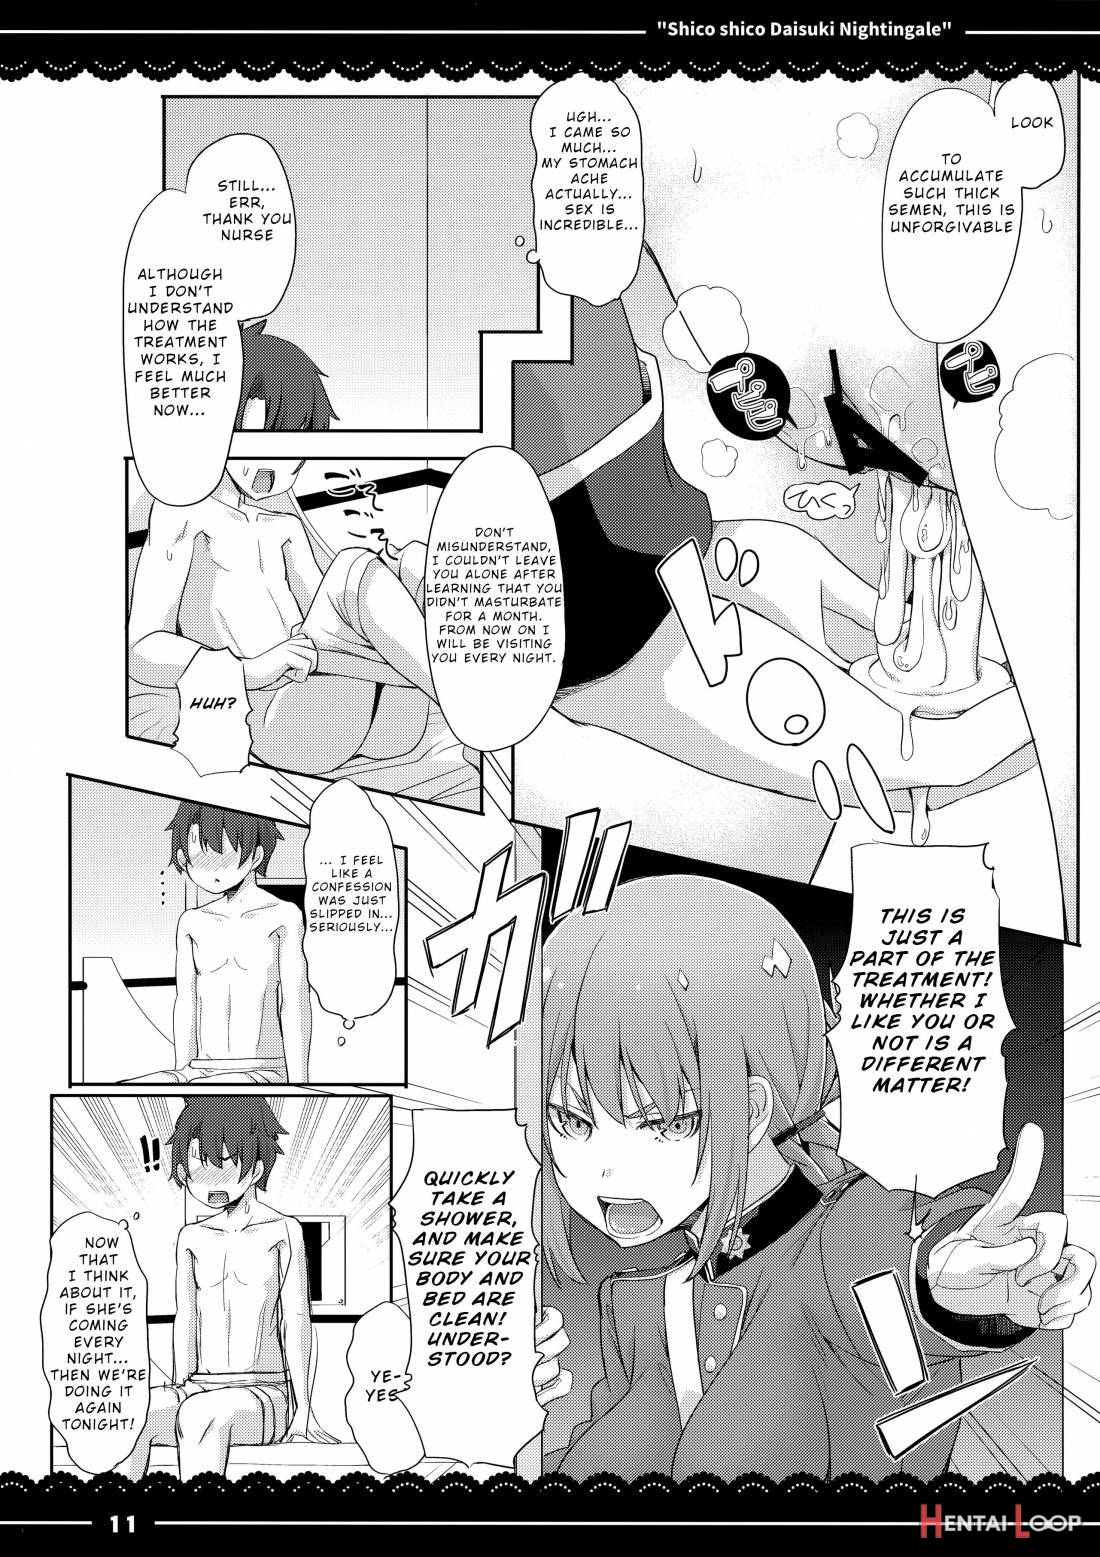 Shikoshiko Daisuki Nightingale + Kaijou Gentei Omakebon page 10